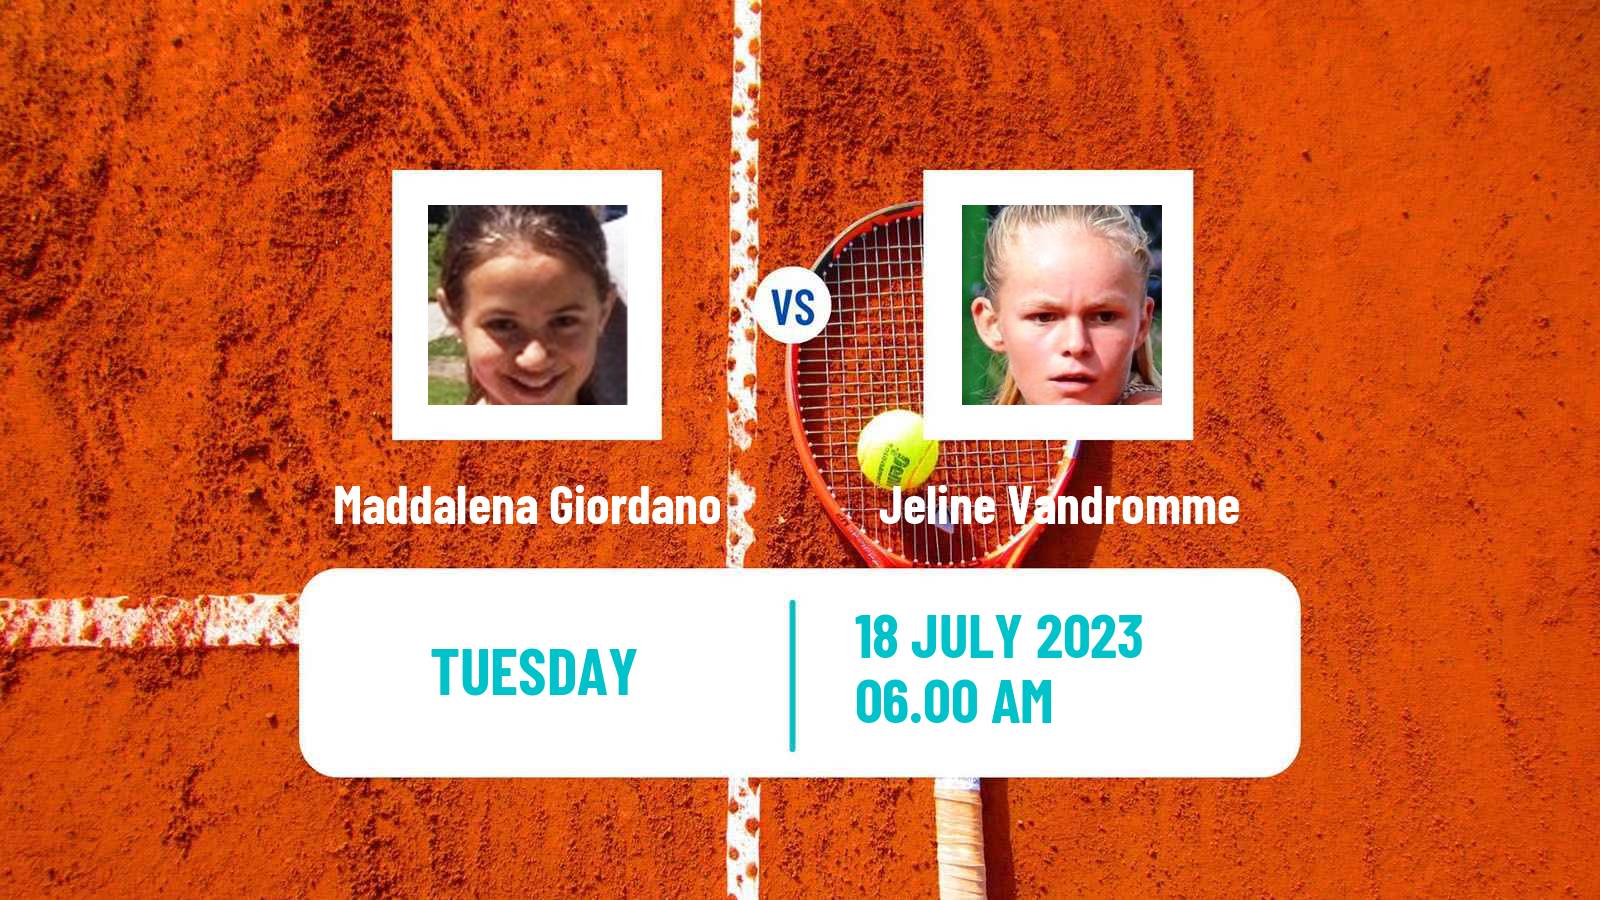 Tennis ITF W15 Les Contamines Montjoie Women Maddalena Giordano - Jeline Vandromme